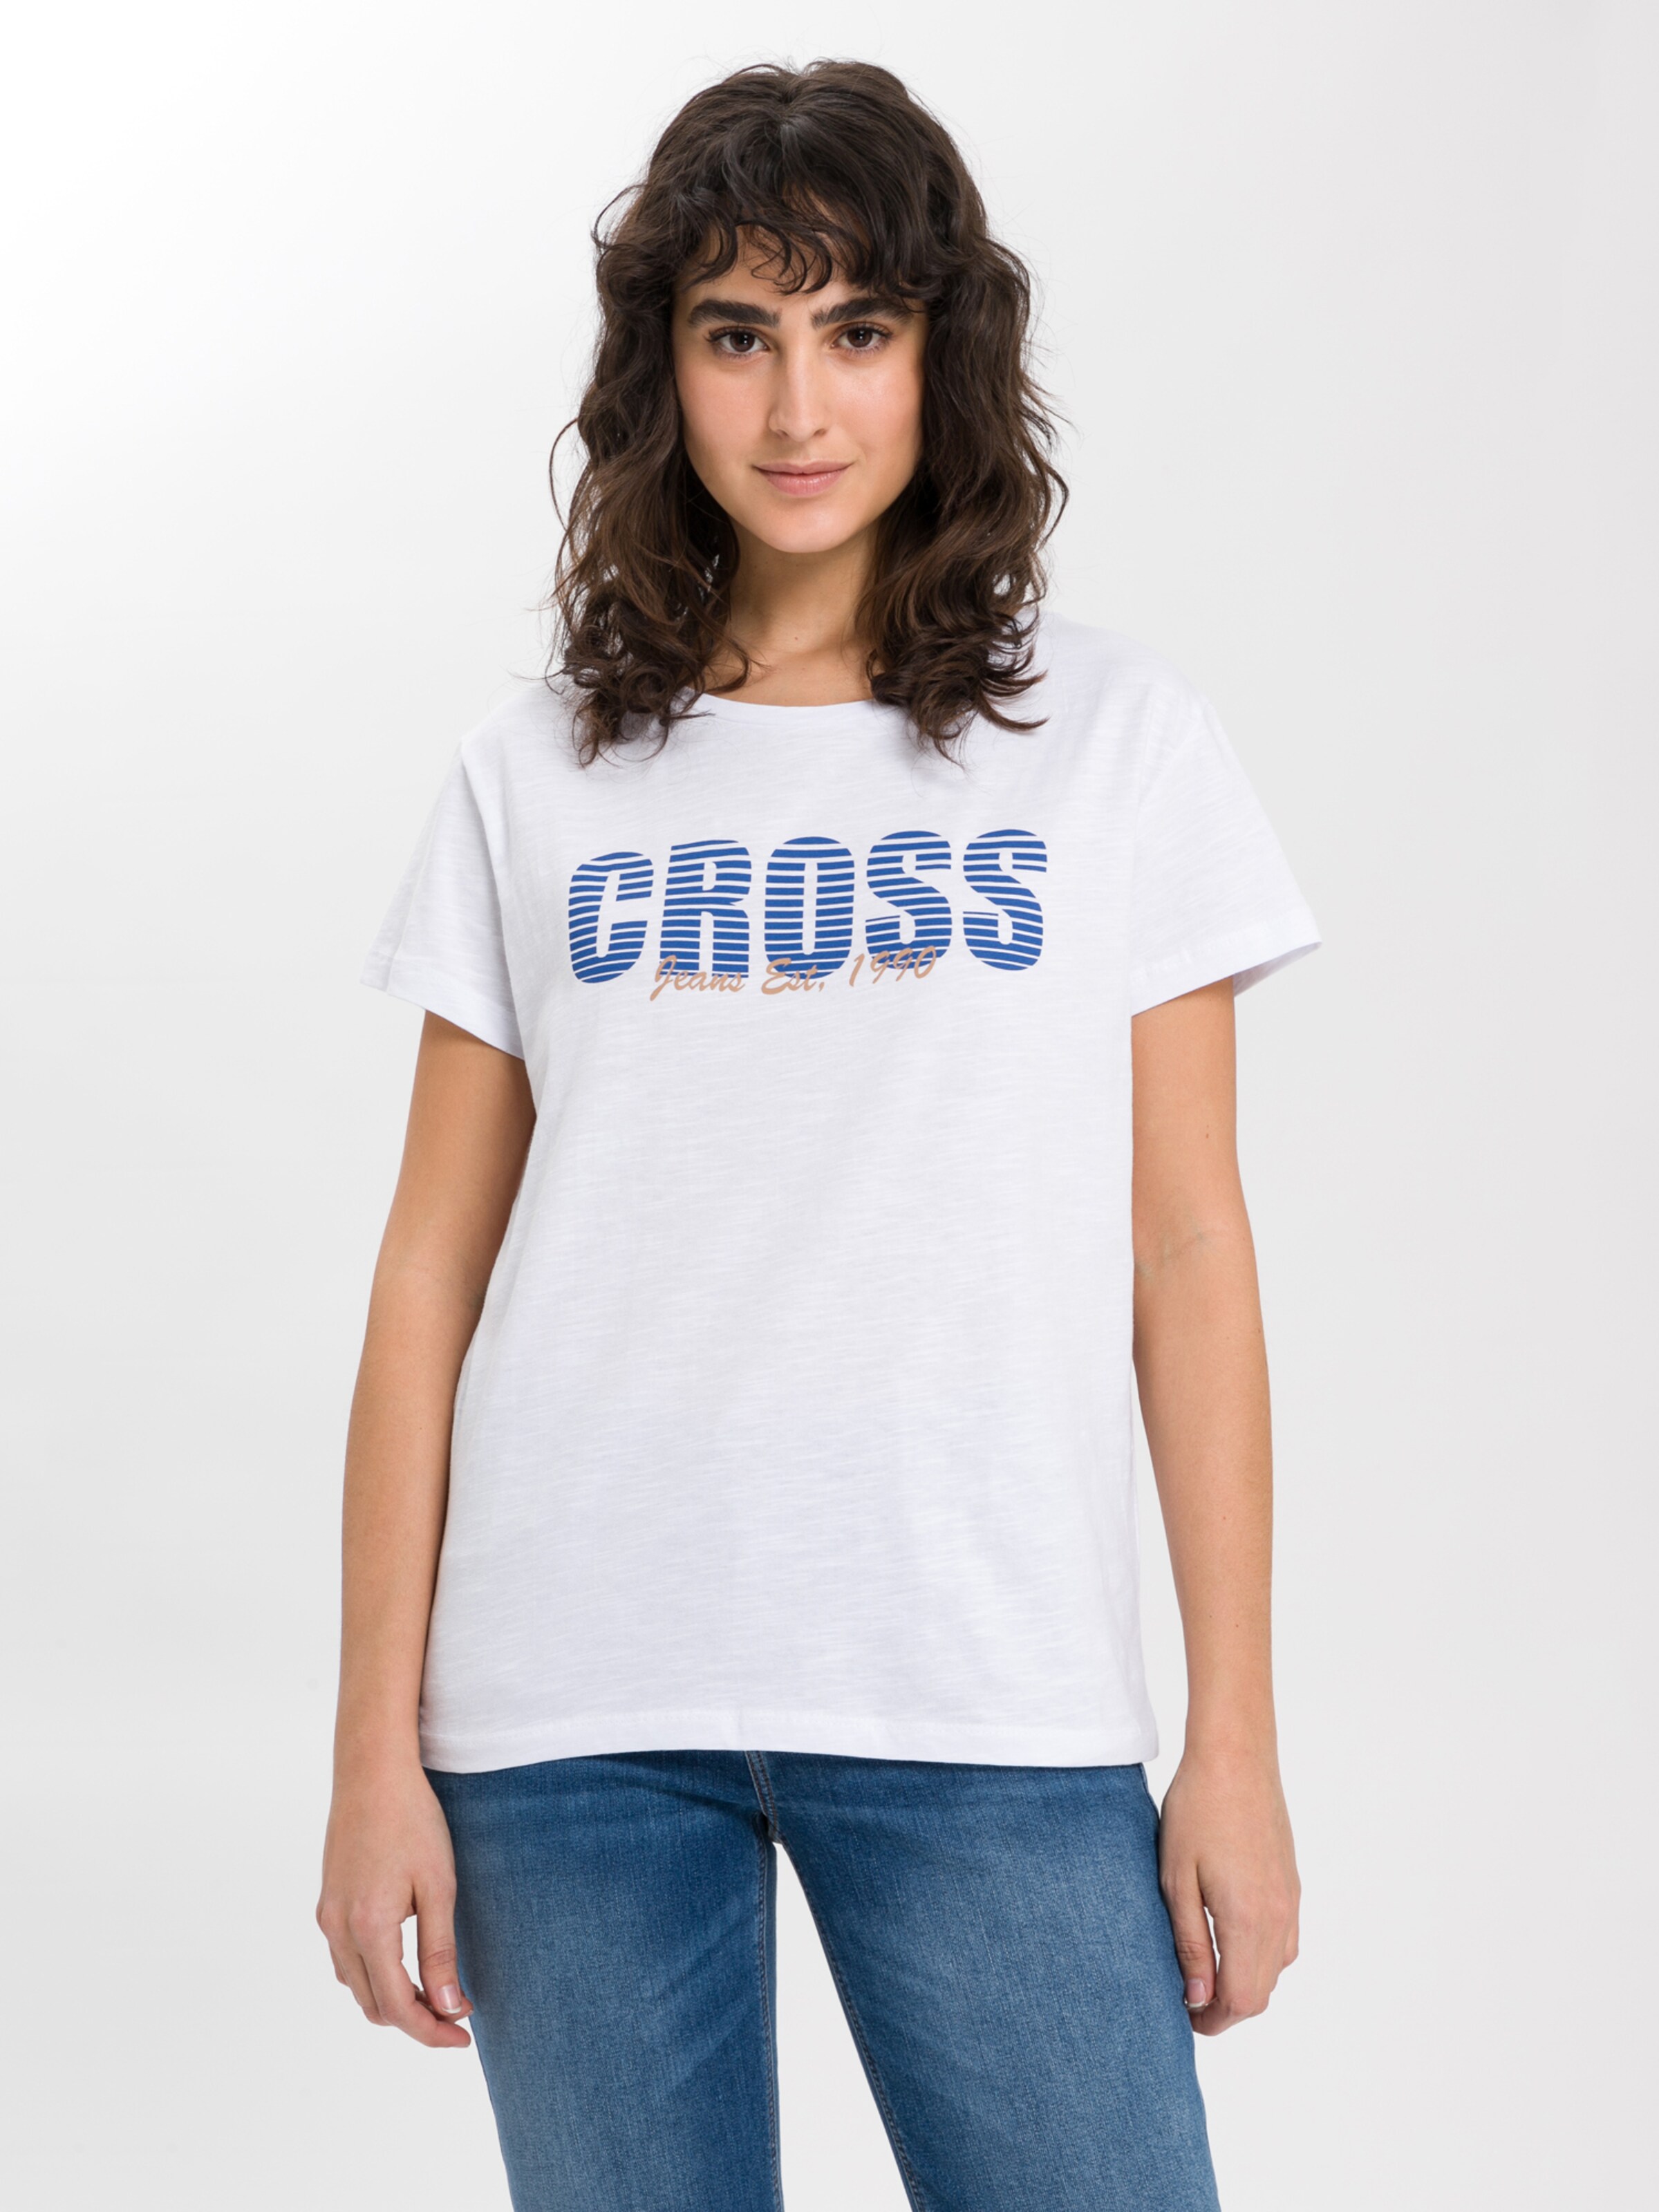 Frauen Shirts & Tops Cross Jeans Shirt in Weiß - YP47418